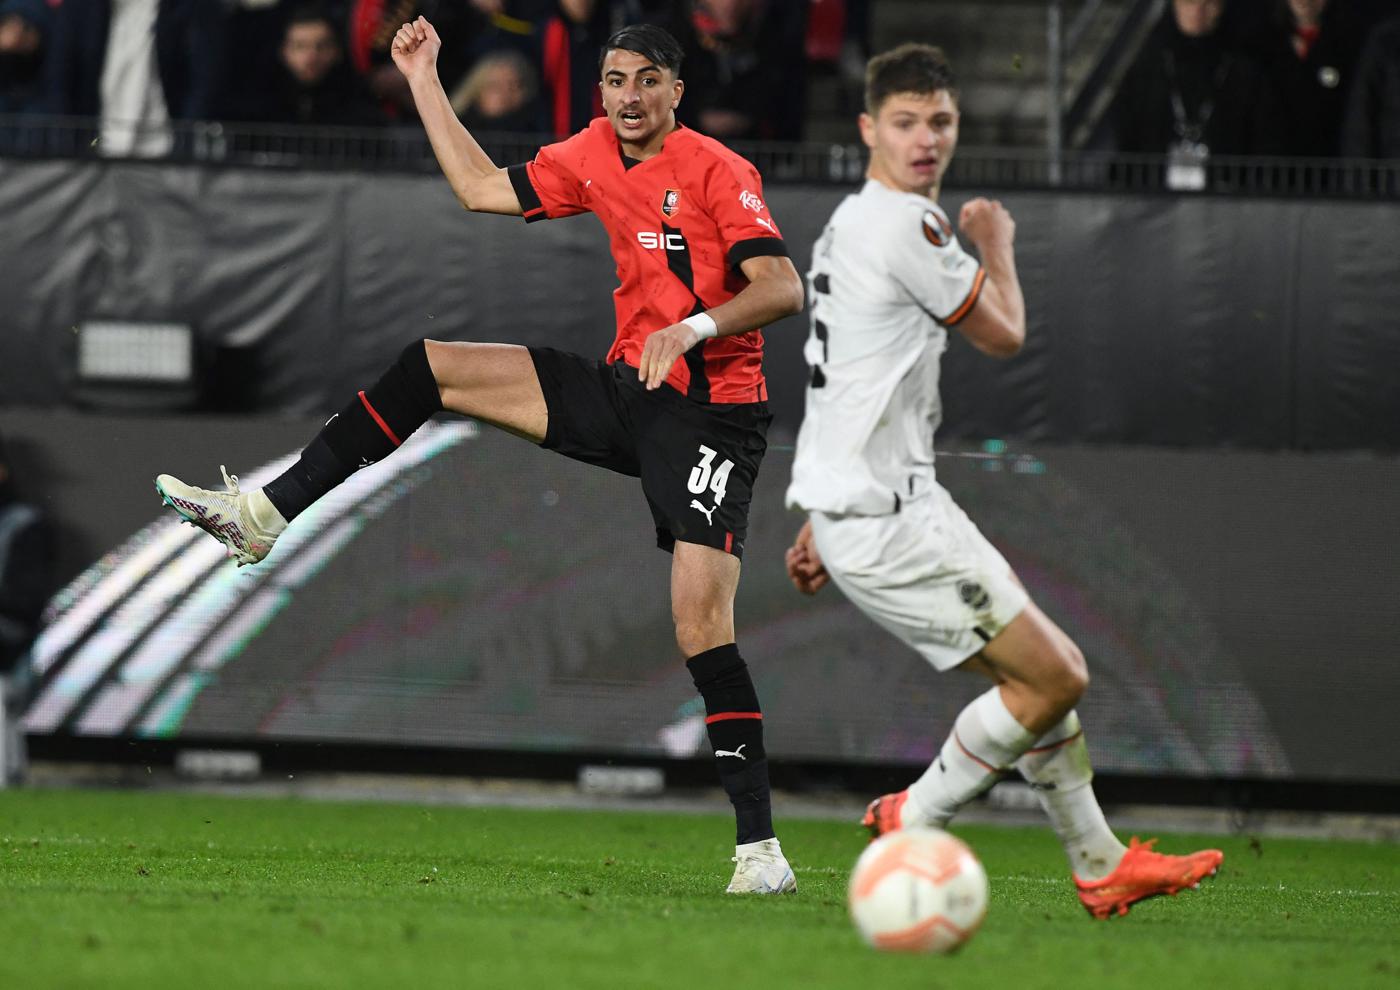 "Rennes vs Shakhtar 2-1. Europa League. Match review, statistics